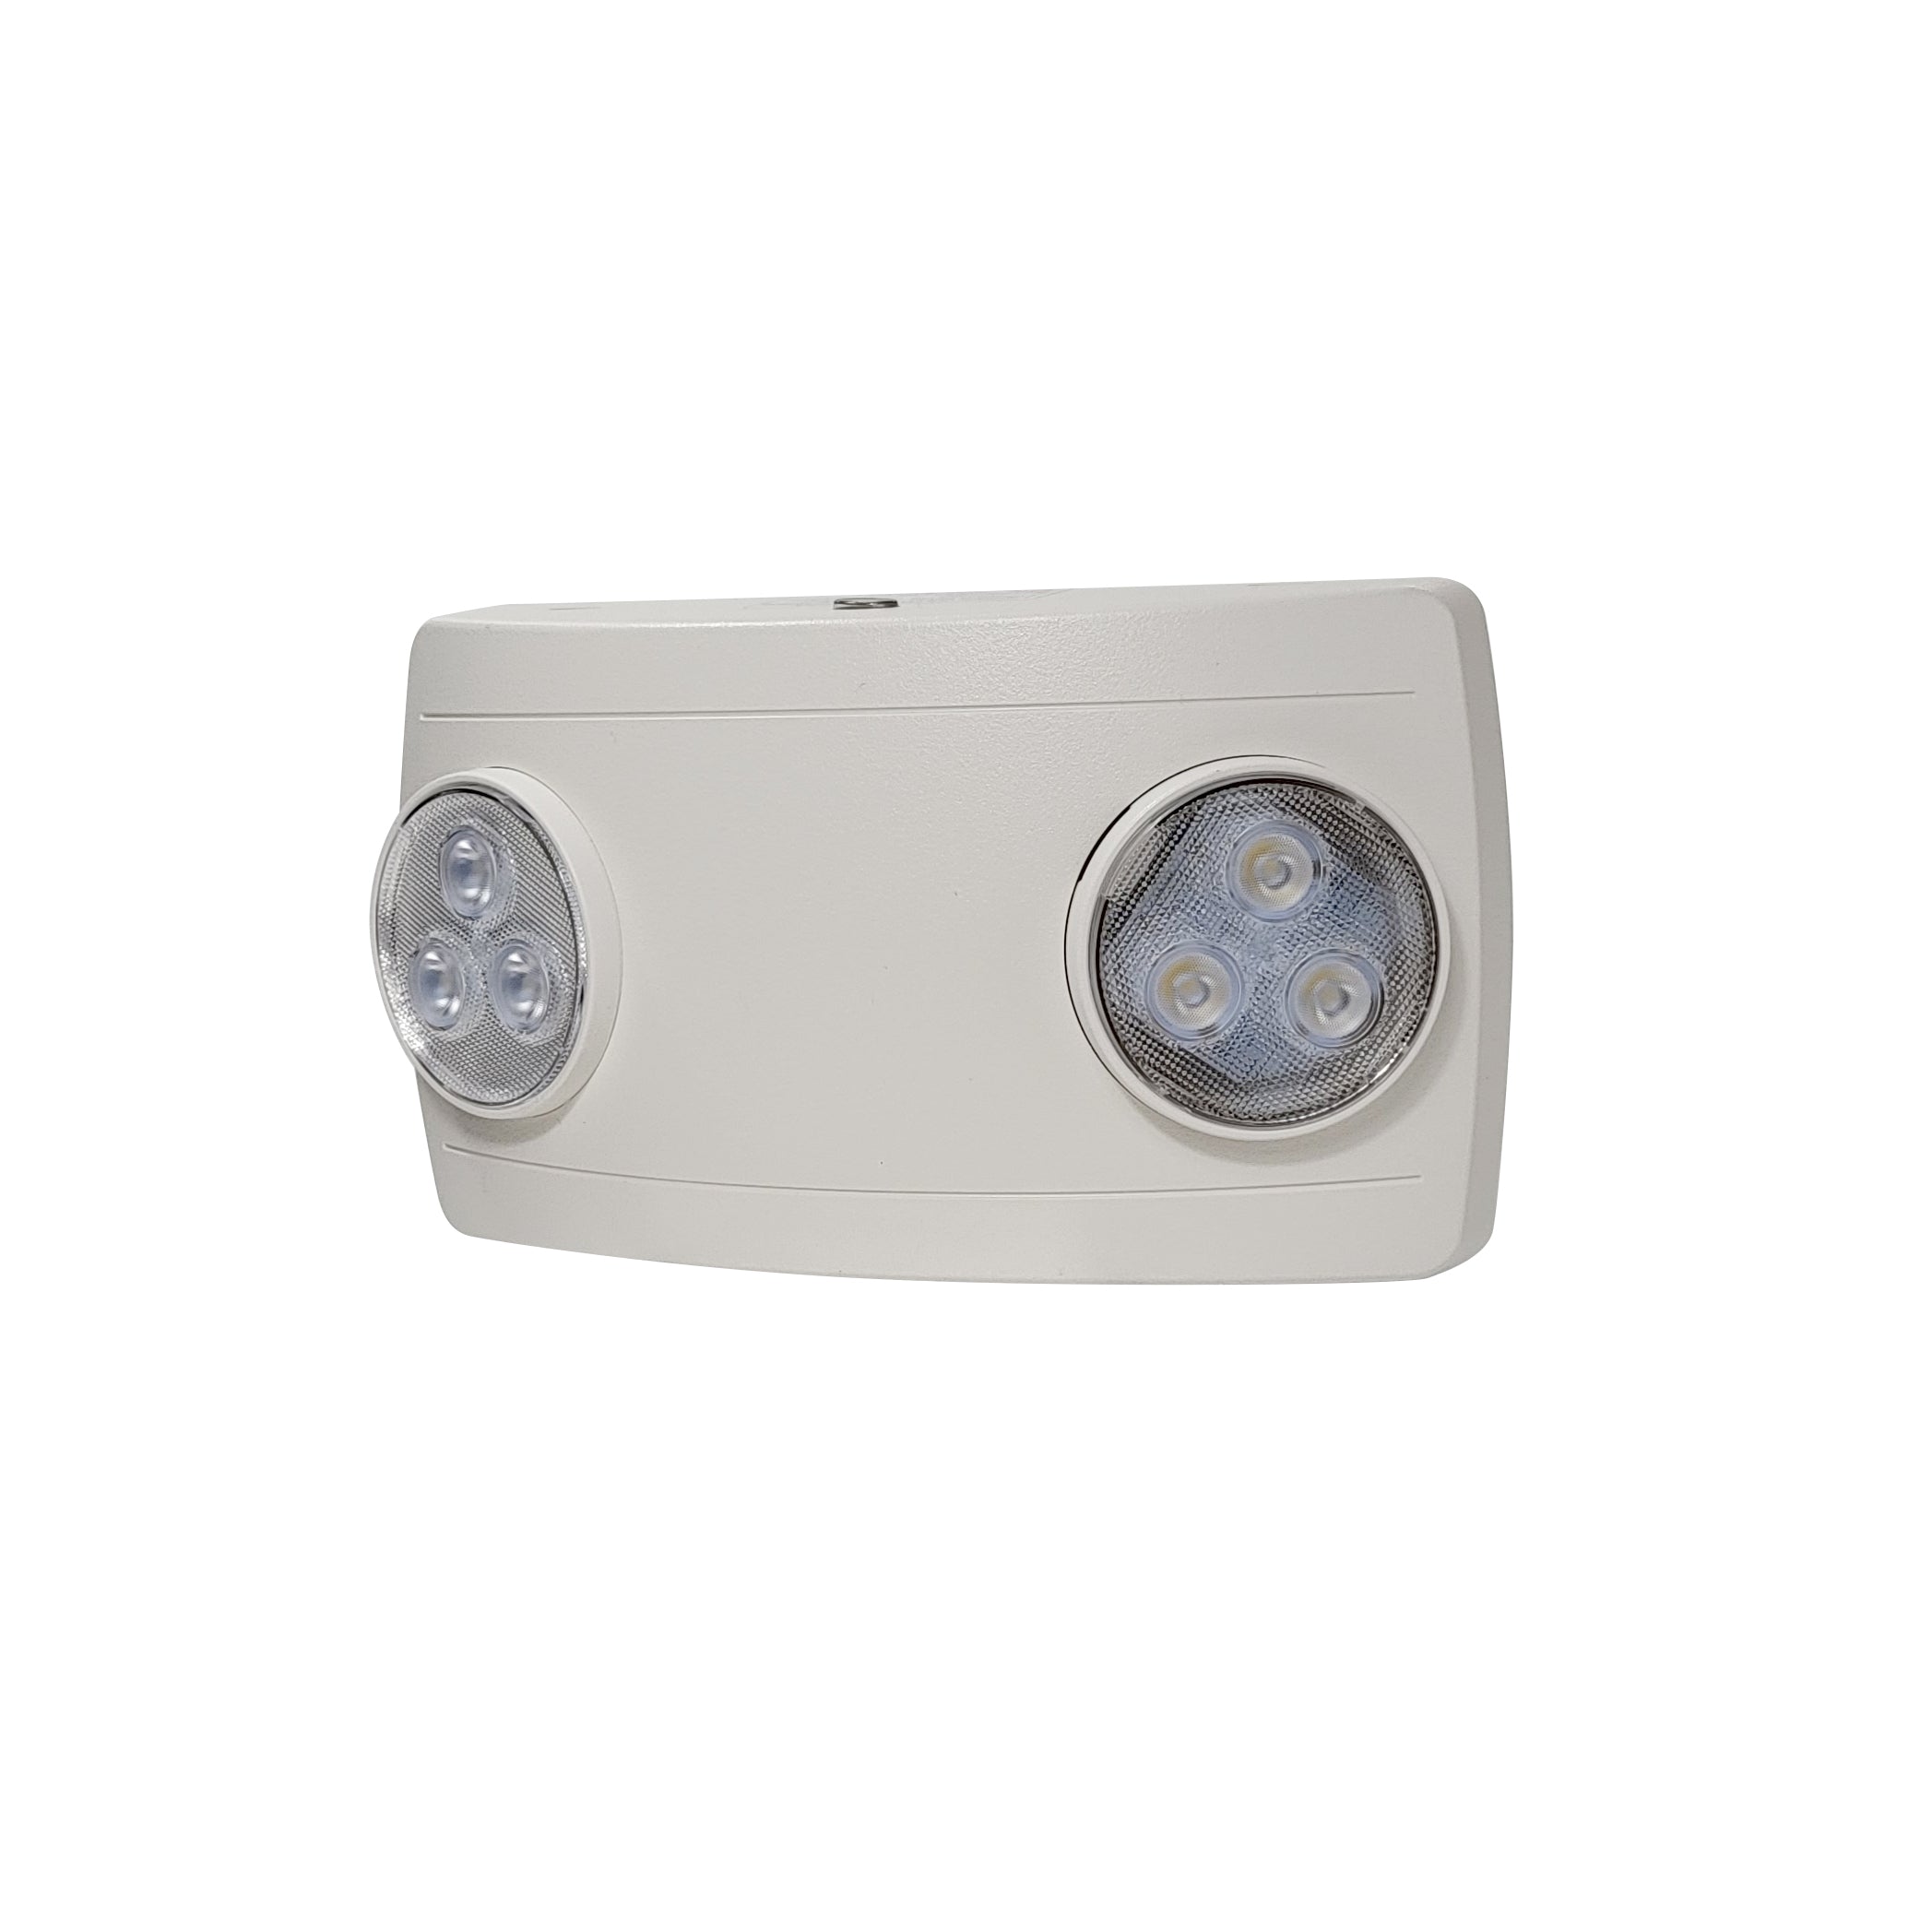 Nora Lighting NE-612LEDHORCW Compact Dual Head LED Emergency Light With 2W Remote Capability, Manual Test, 120/277V - White